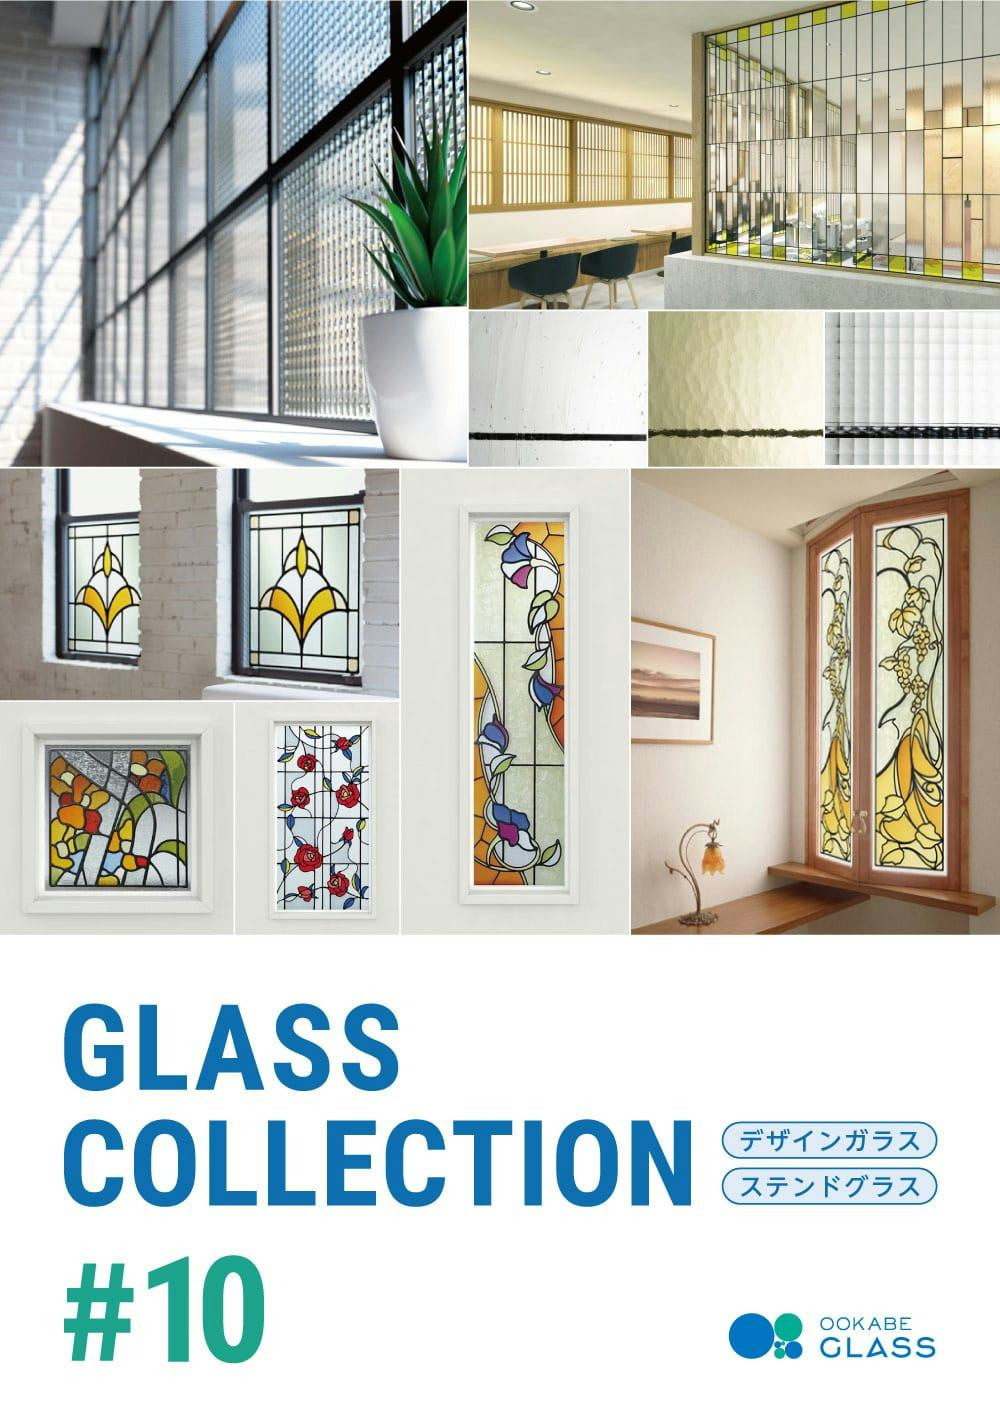 OOKABEb GLASSのガラスの総合カタログ「GLASS COLLECTION Vol.10」の表紙